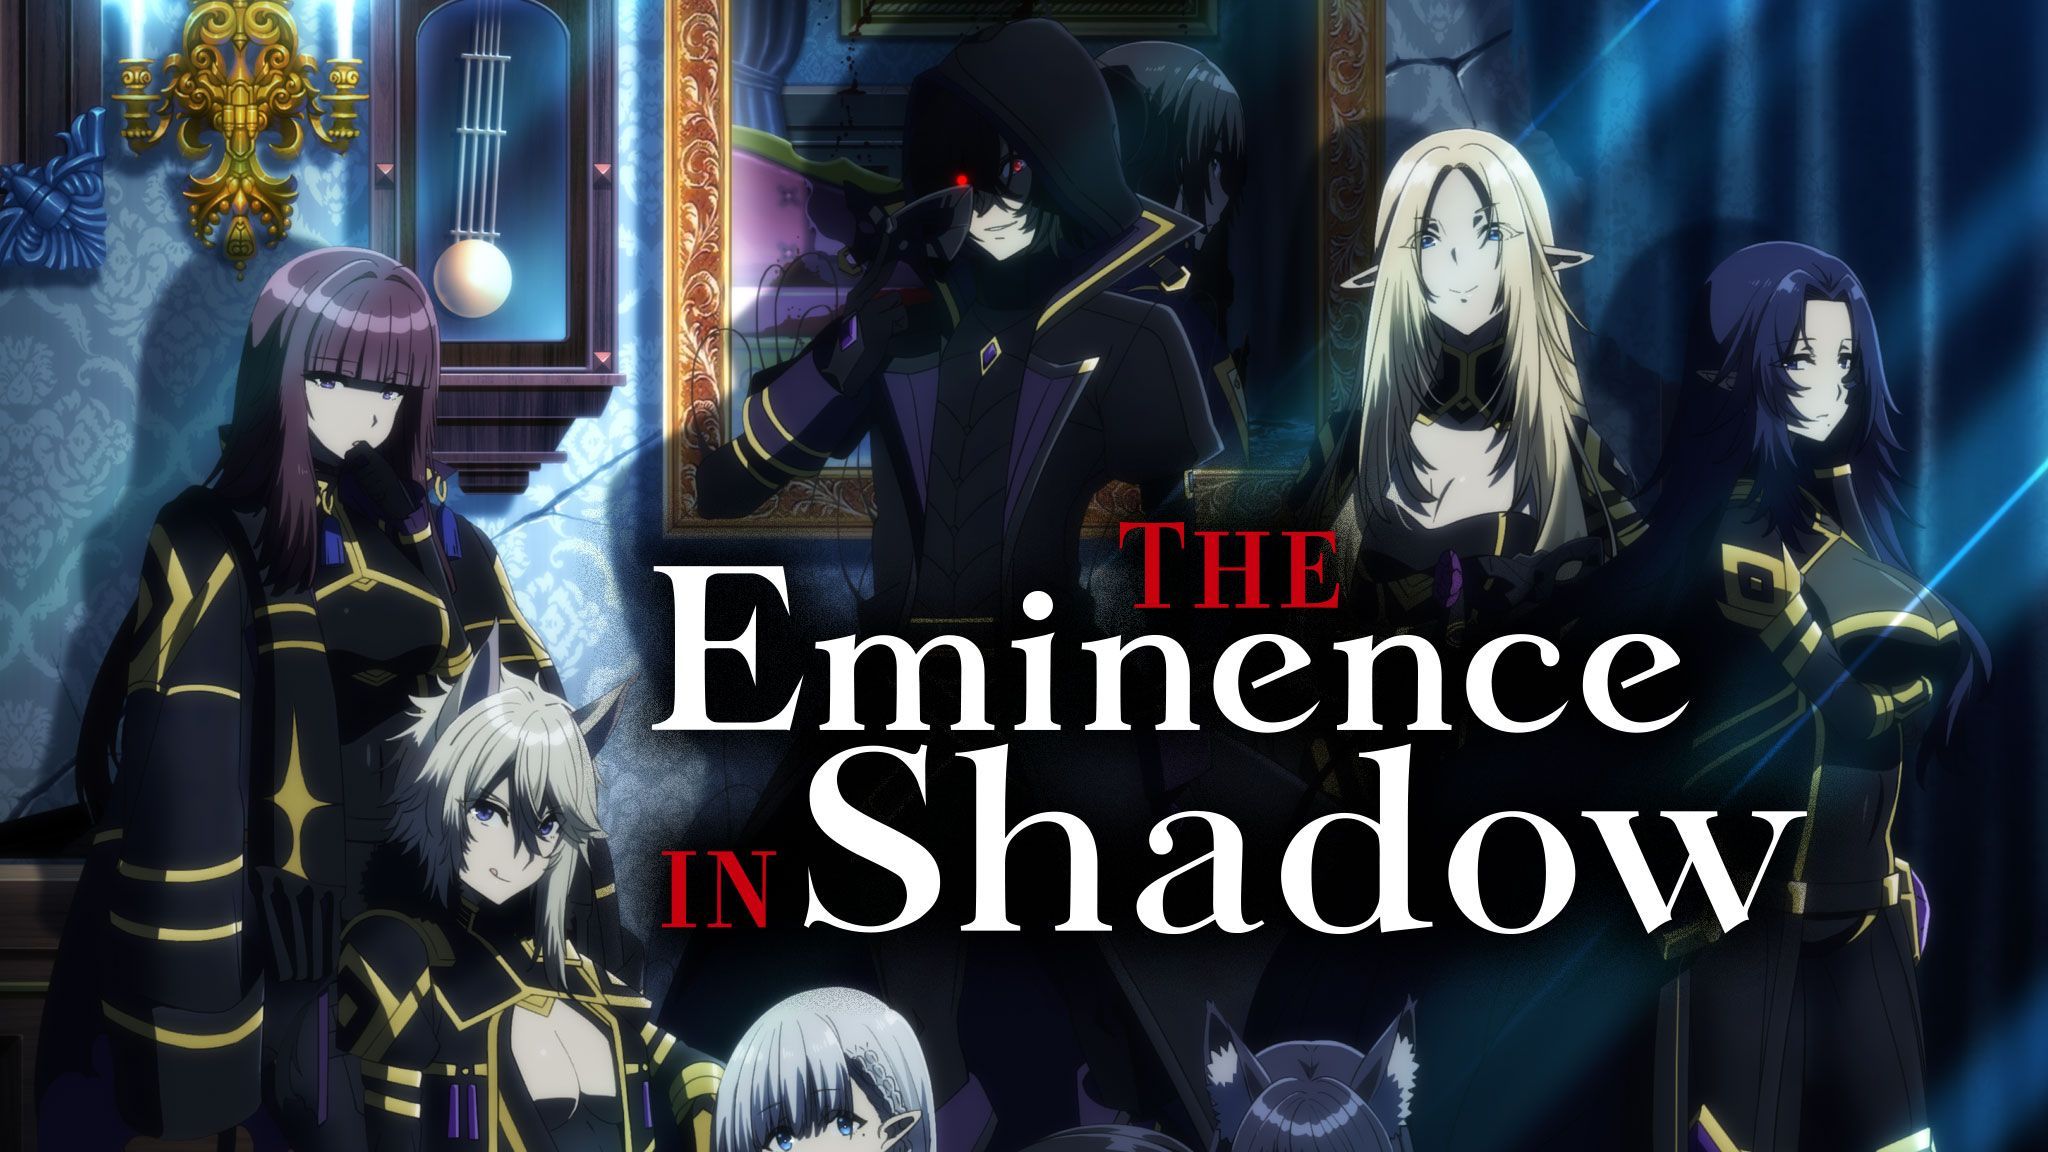 The Eminence In Shadow  Season 2 - English Dub Trailer : r/Animedubs